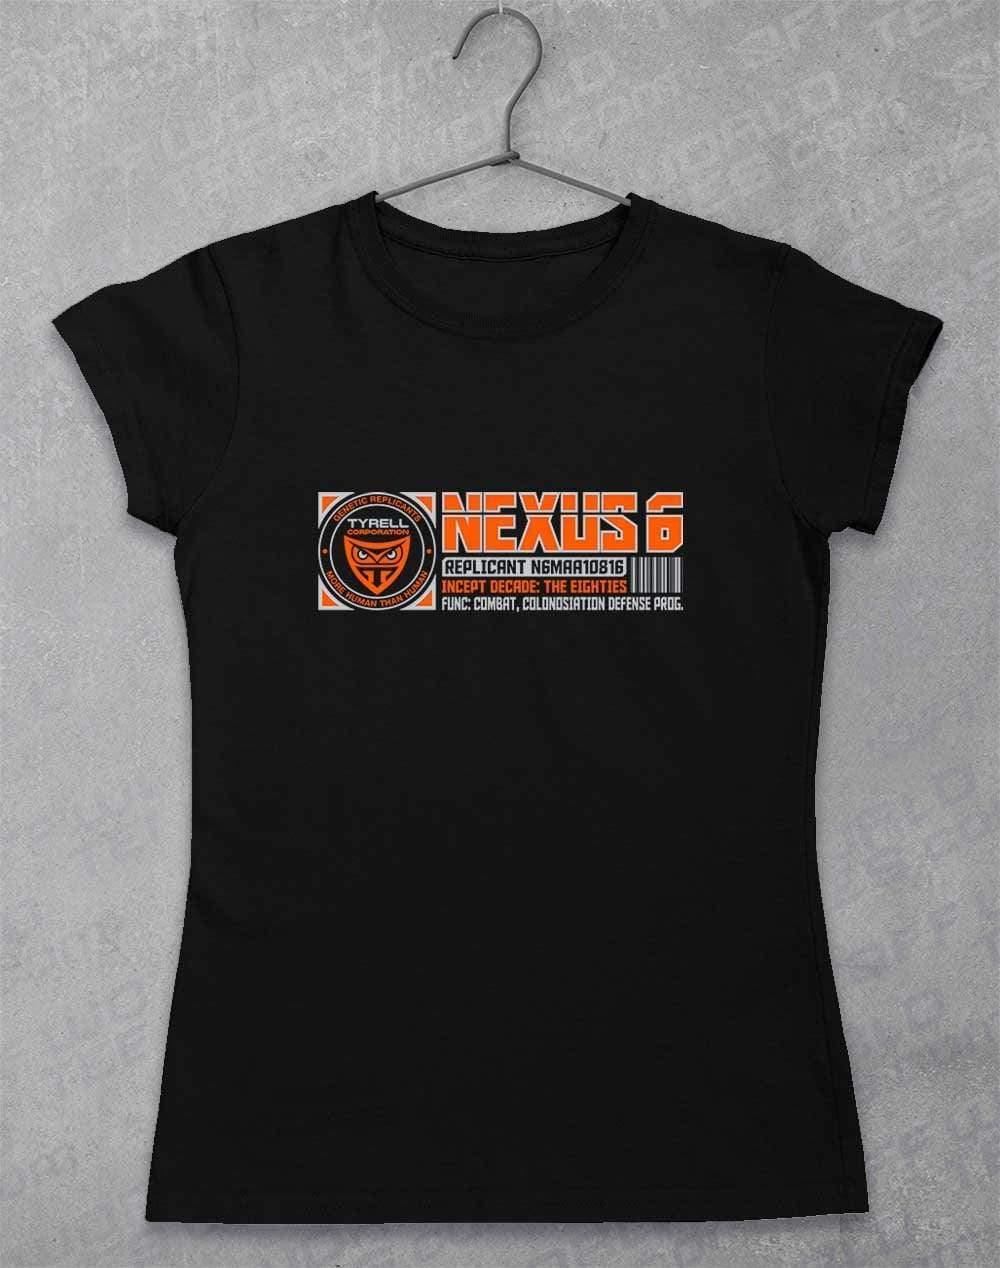 Nexus 6 Replicant Incept Date (CHOOSE YOUR DECADE!) Women's T-Shirt The Eighties - Black / 8-10  - Off World Tees